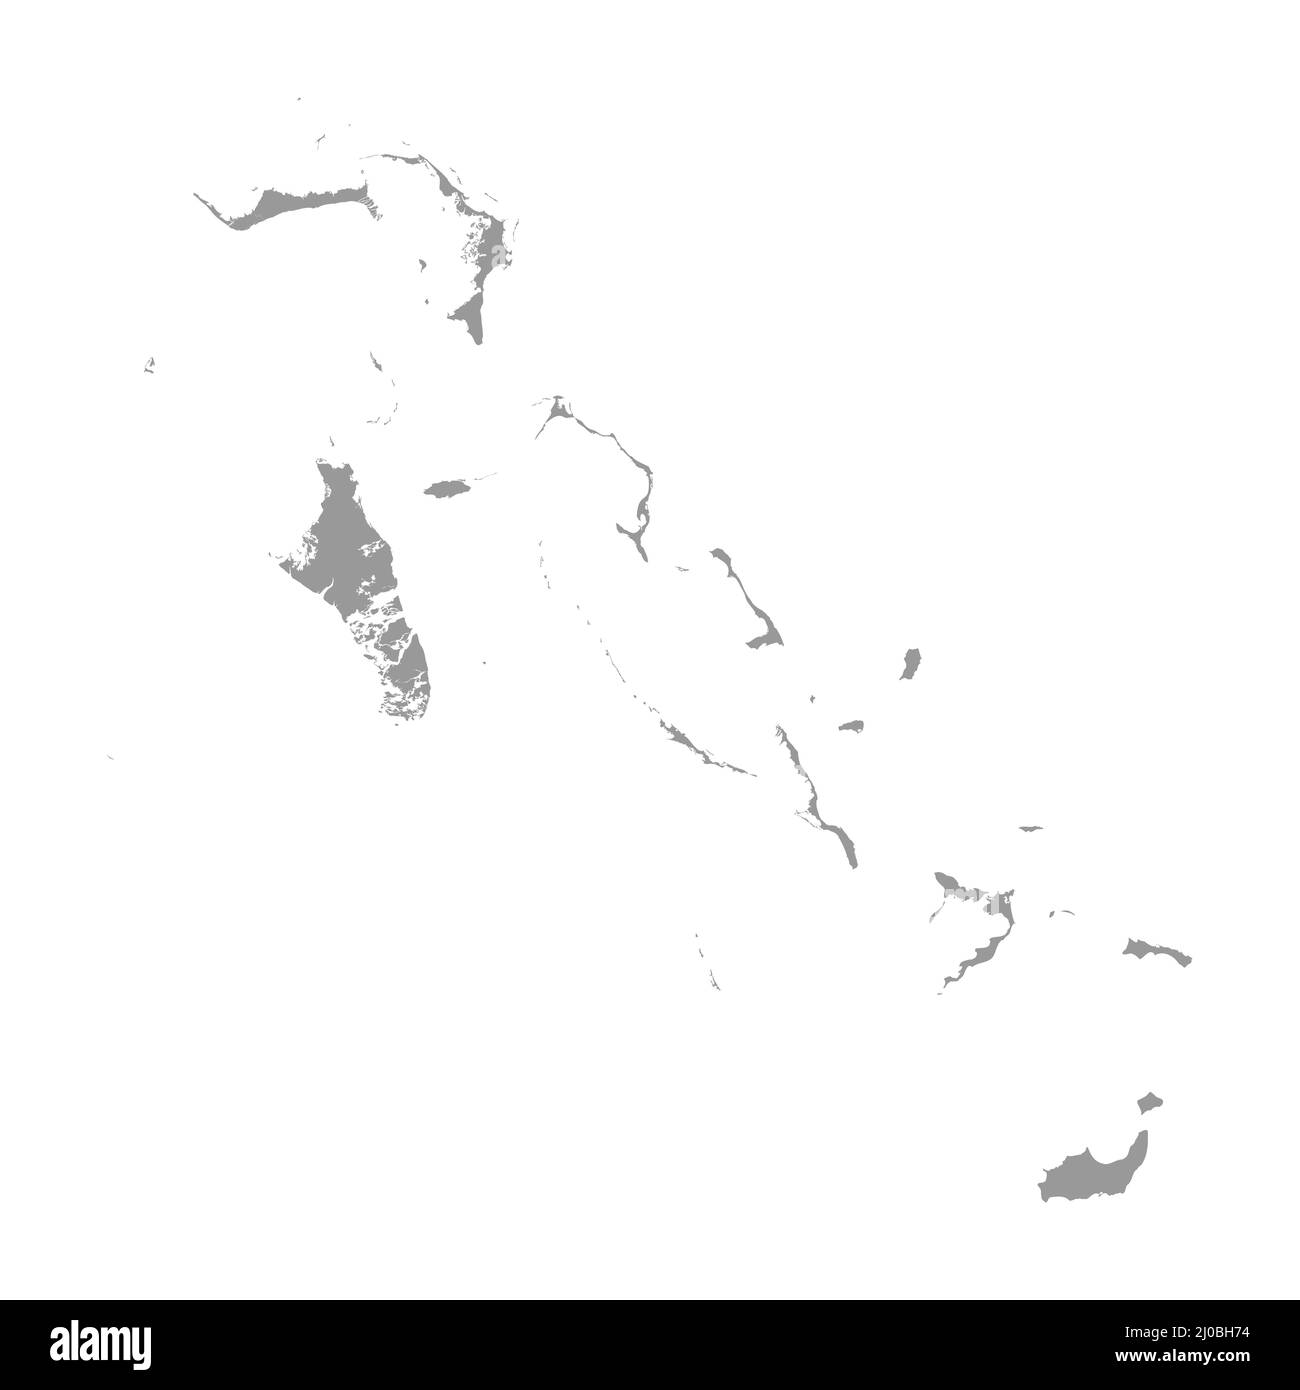 Bahamas vector country map silhouette Stock Vector